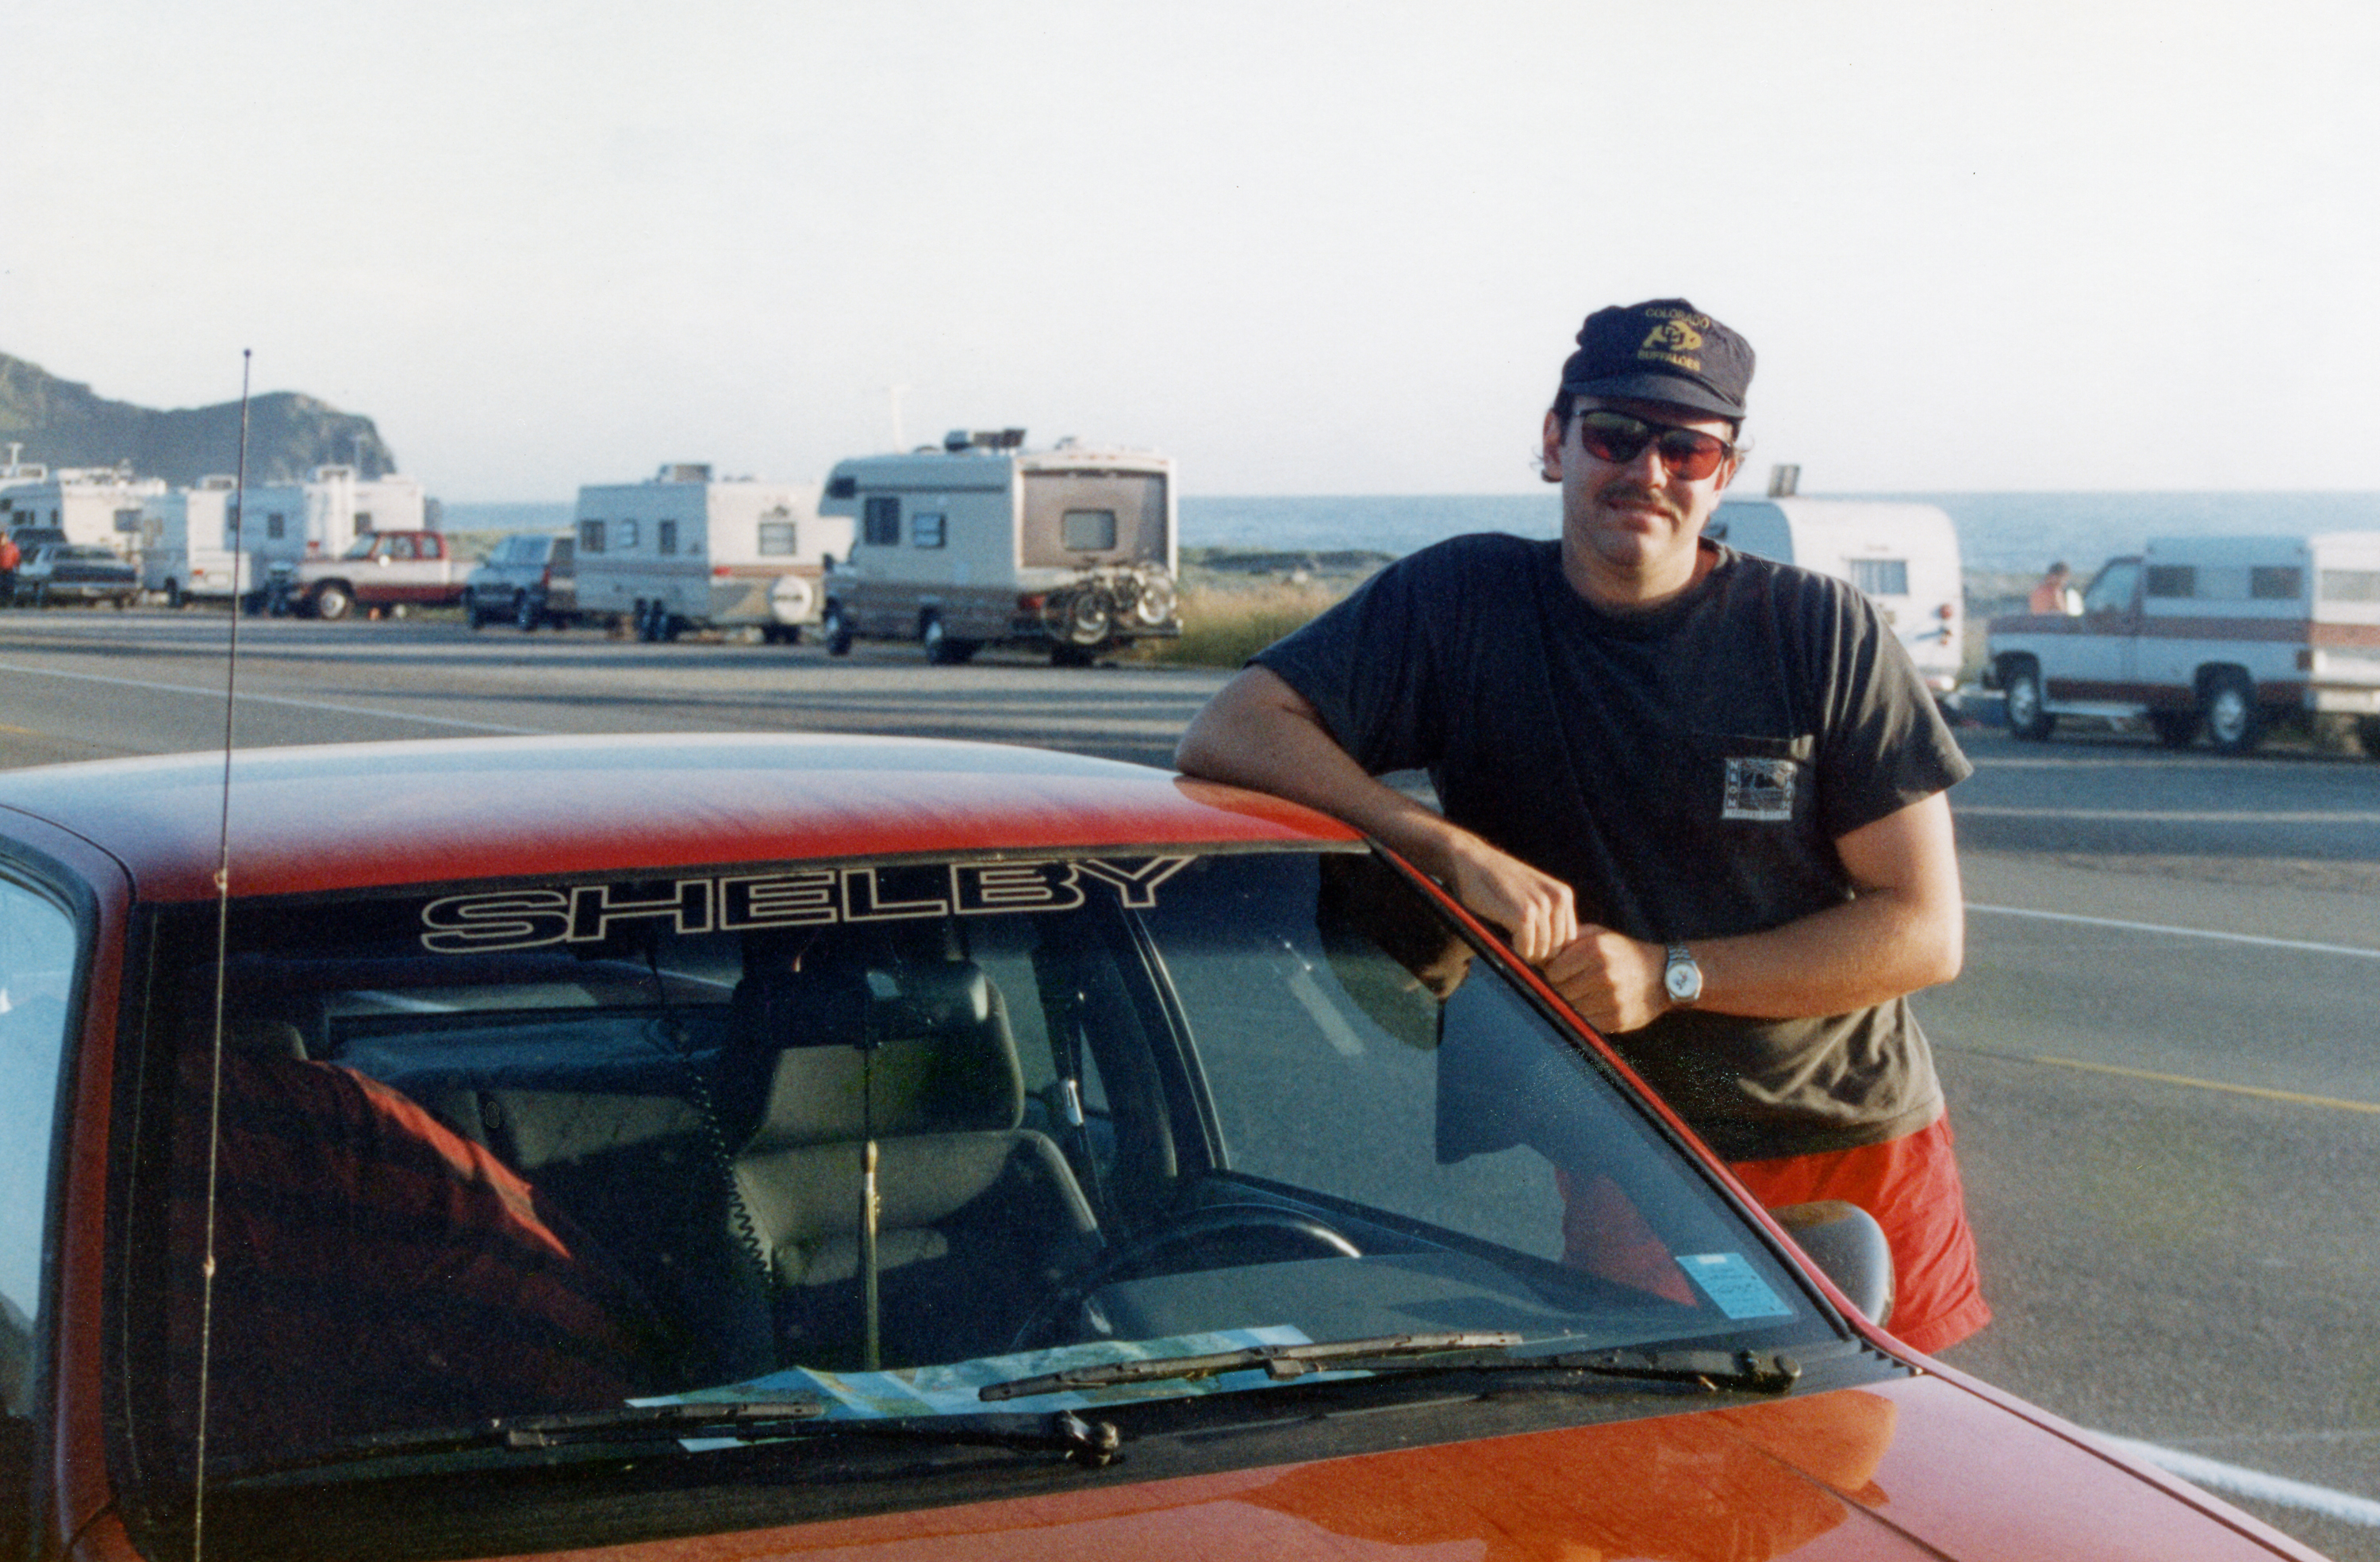 1989 Dodge CSX Pacific Coast Highway